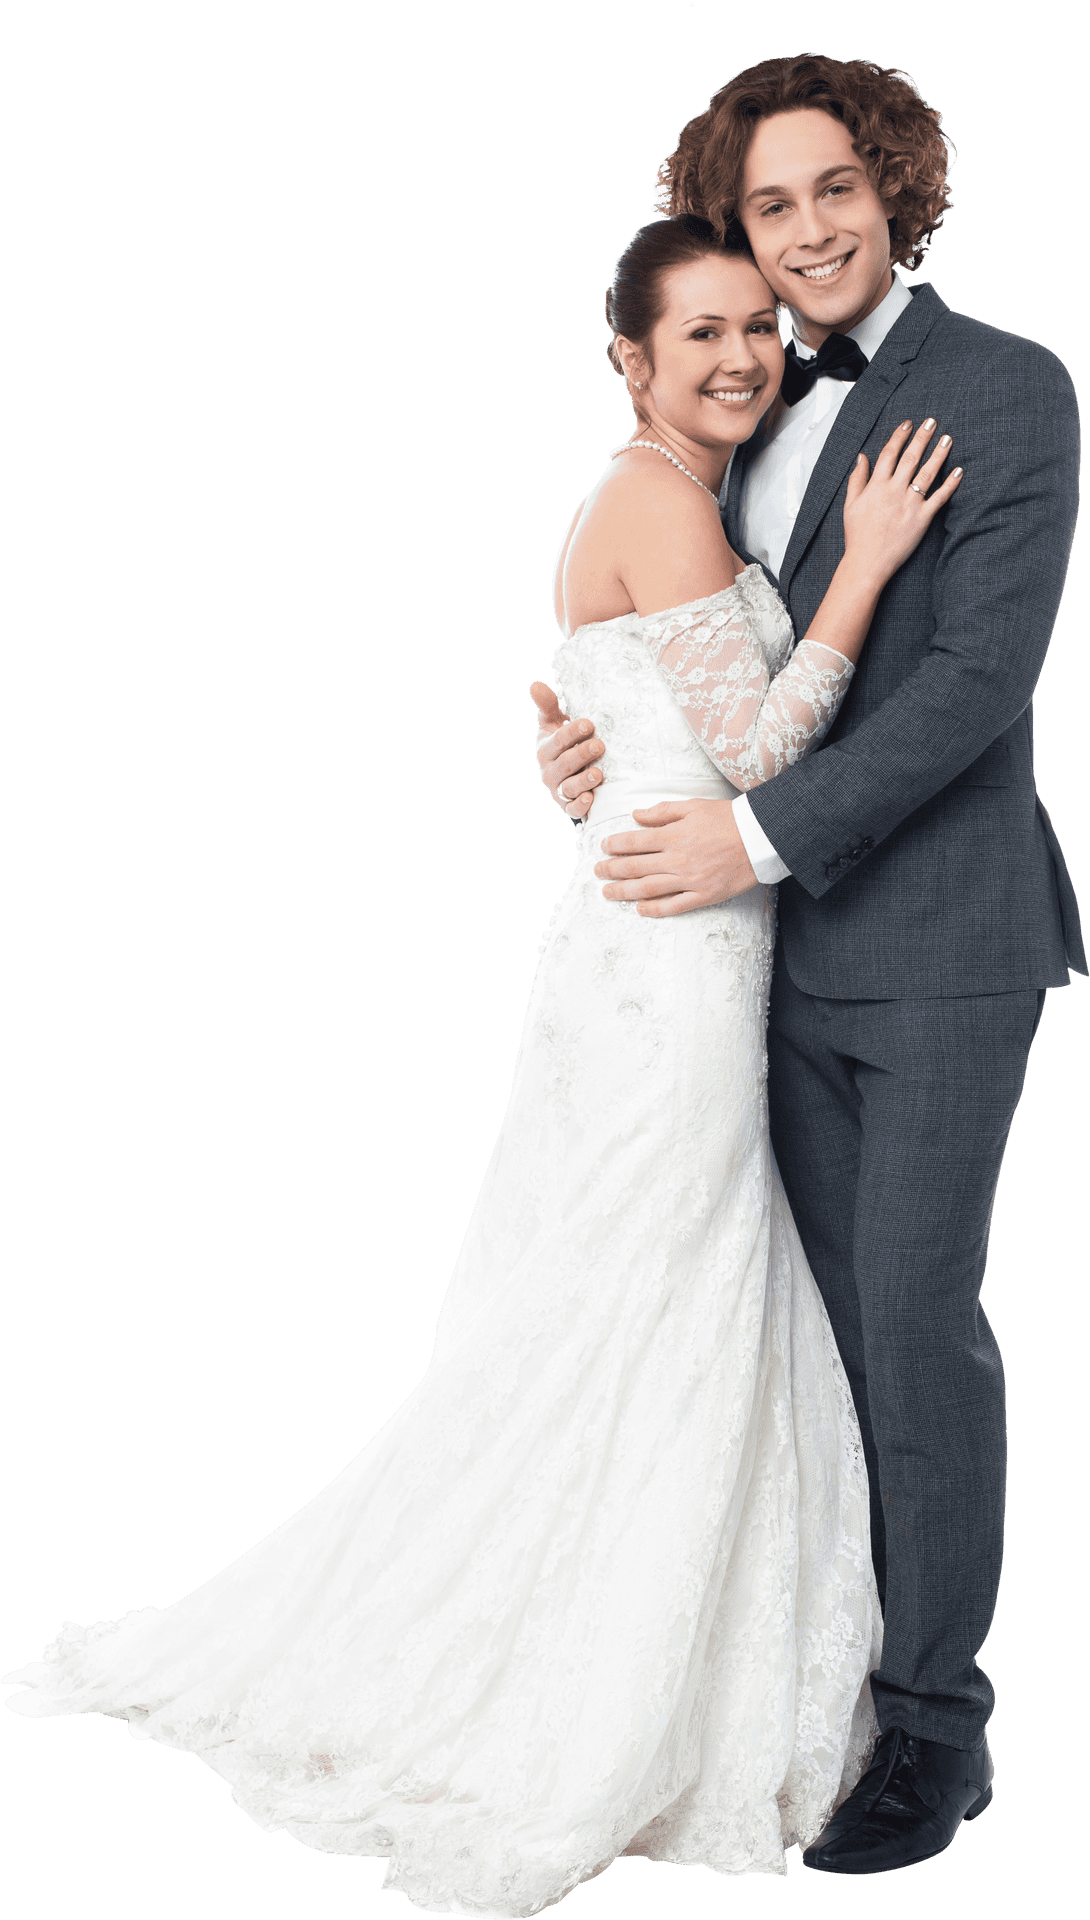 Joyful Wedding Couple Embrace PNG image